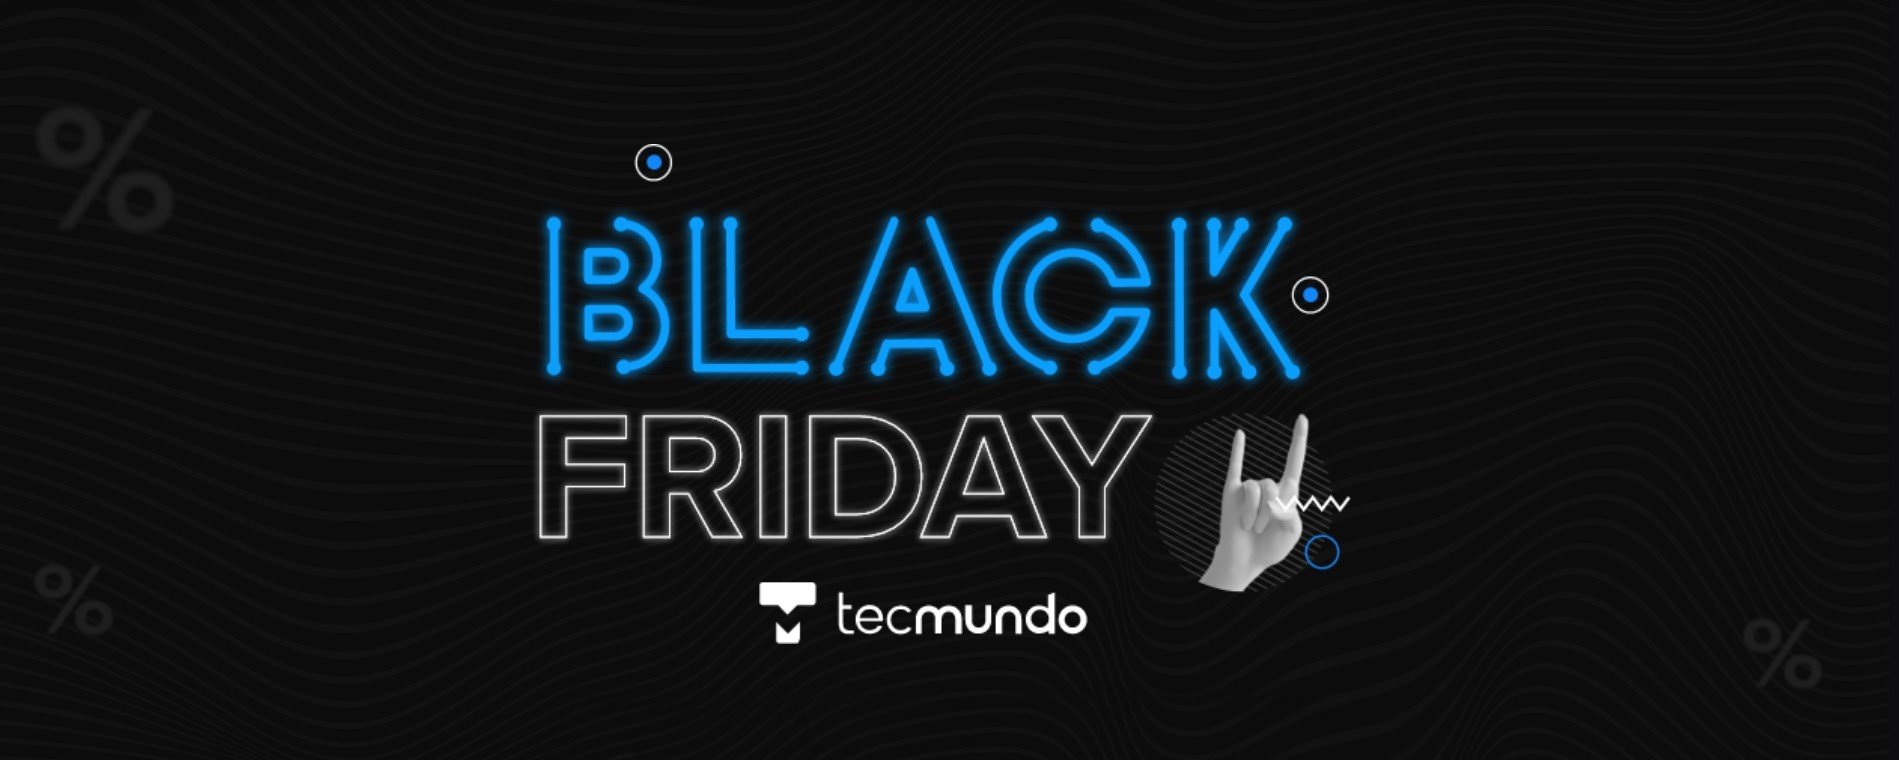 TecMundo na Black Friday: prepare-se para a nossa cobertura completa -  TecMundo